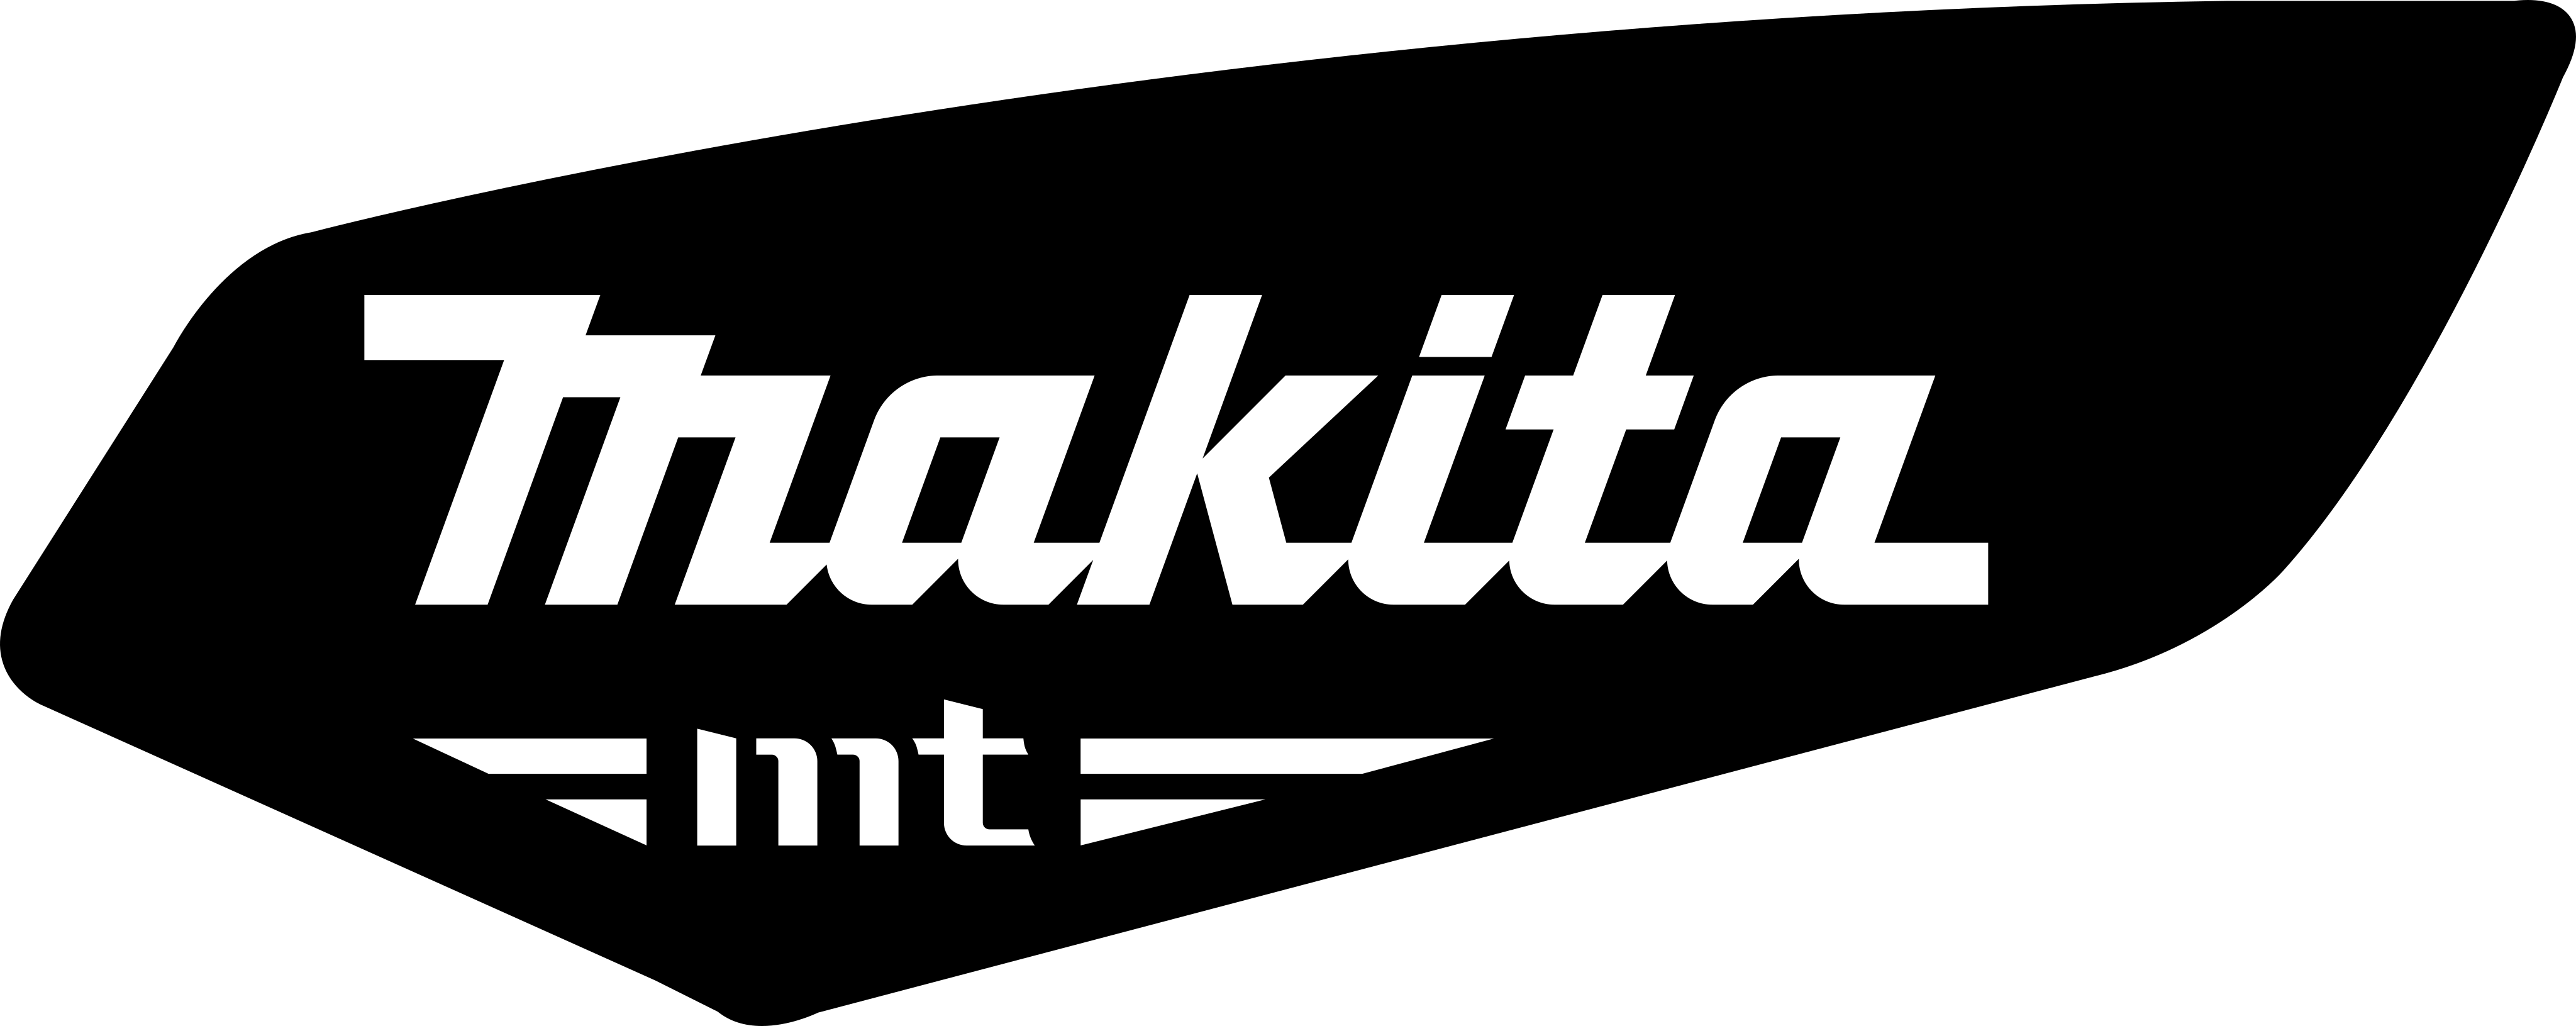 makita mt logo 1 - Makita MT Logo